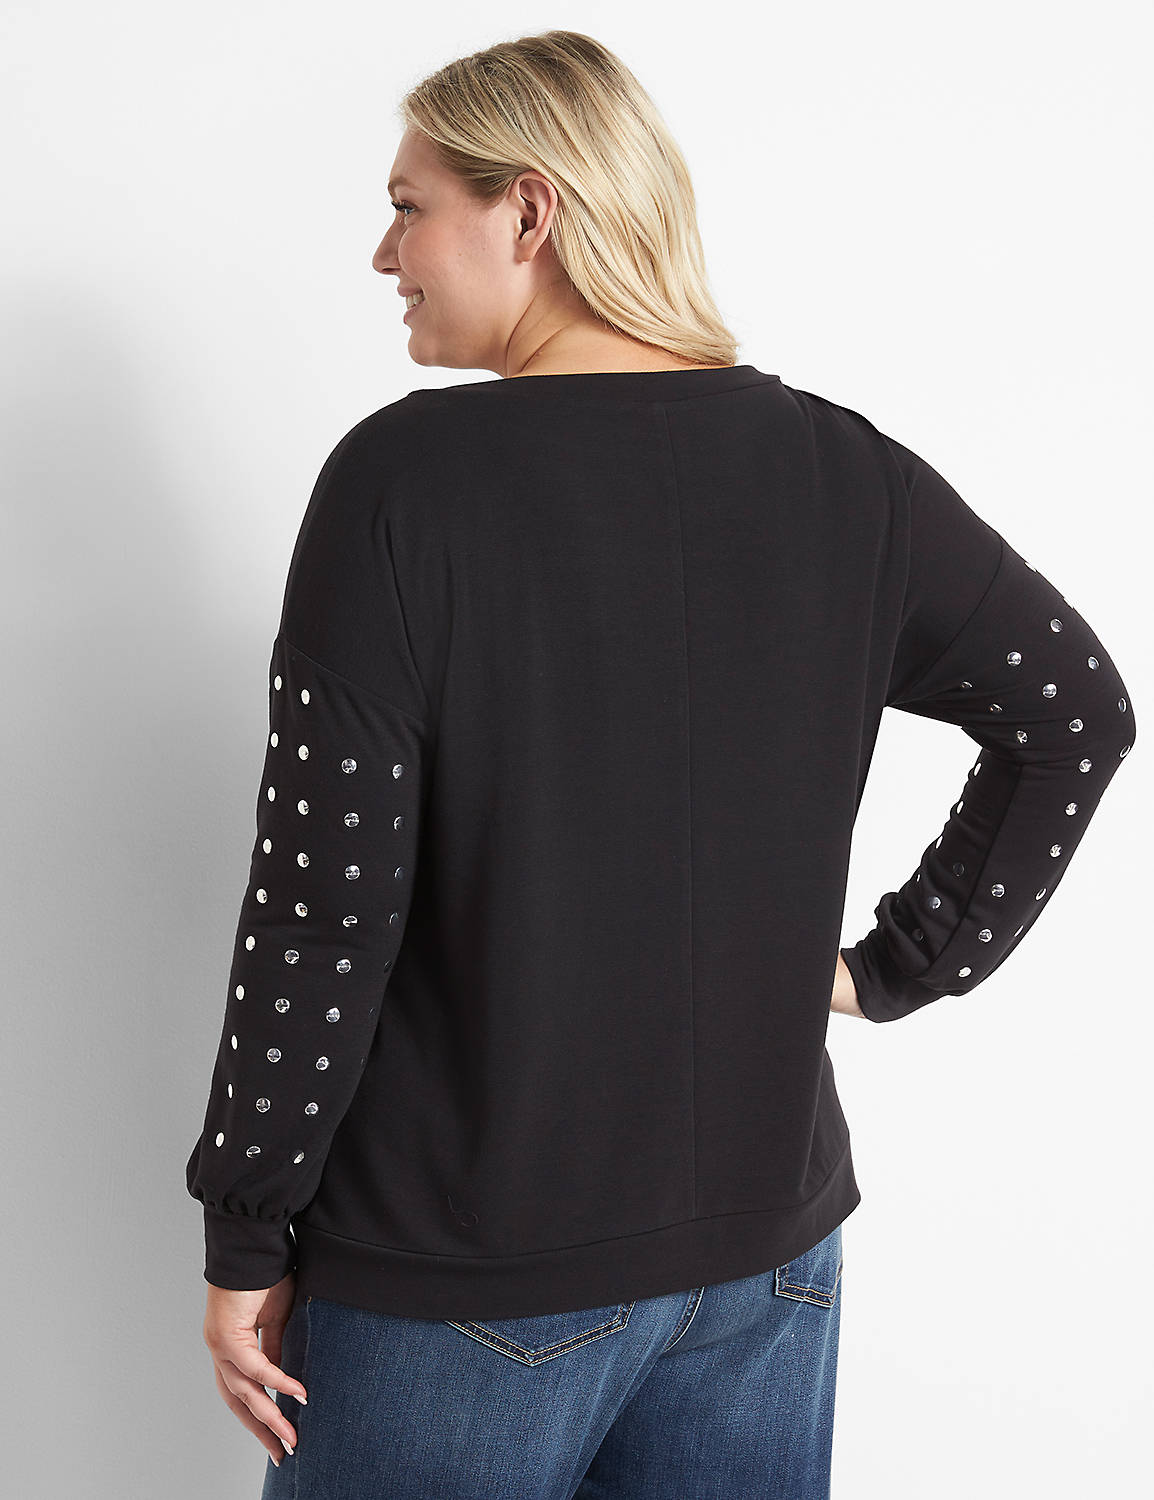 Long Sleeve Boatneck Sweatshirt With Studs 1123758:Ascena Black:26/28 Product Image 2